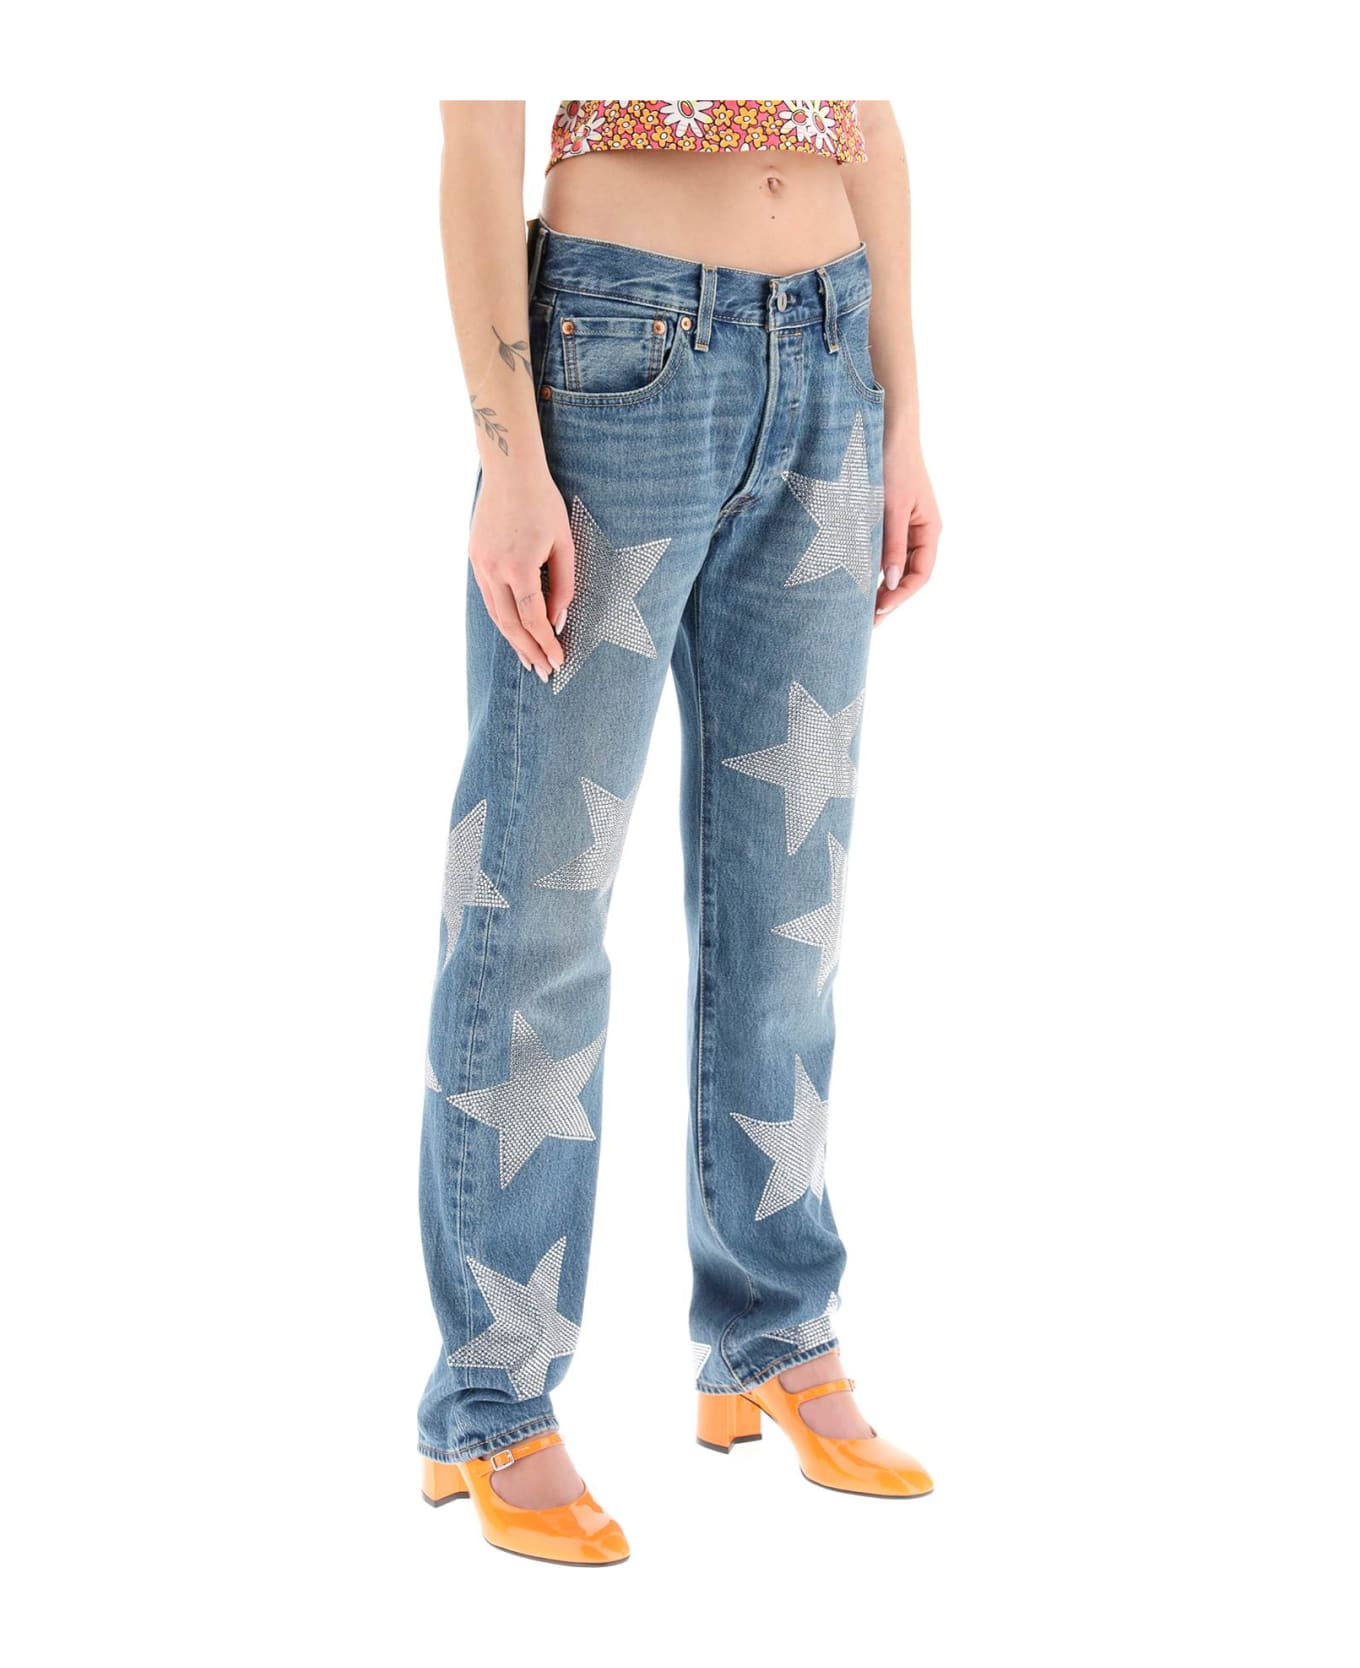 Collina Strada 'rhinestone Star' Jeans X Levis - SILVER STAR (Blue)